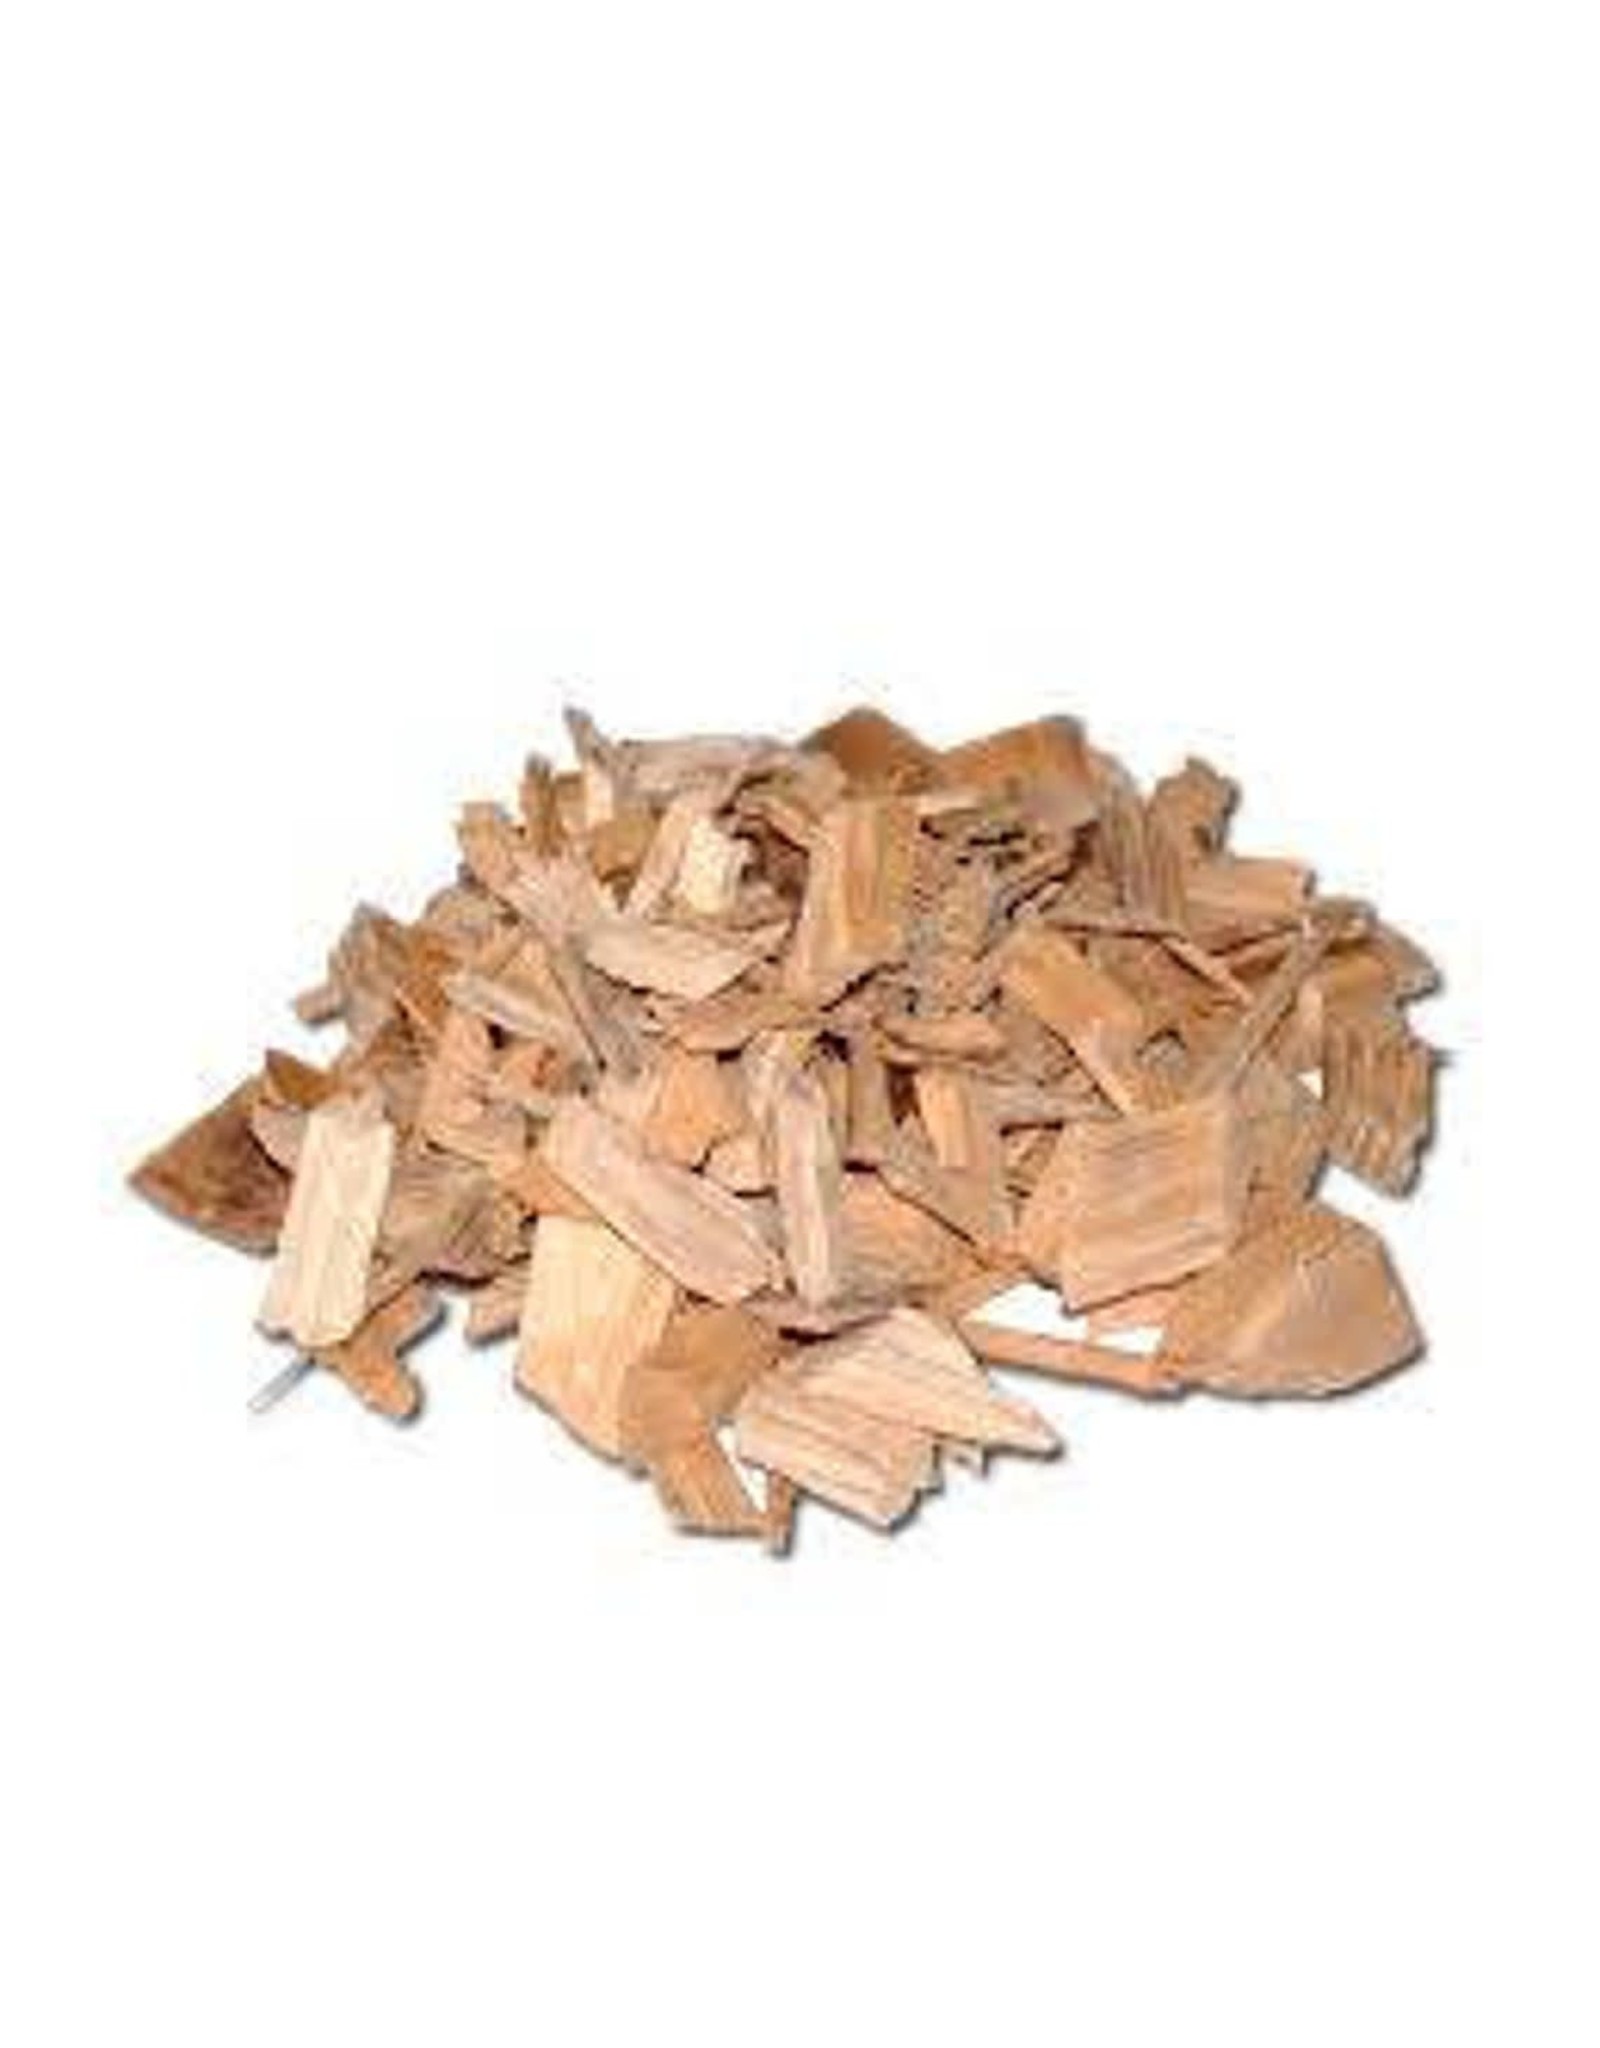 The Cellar Pecan wood Chips 8 oz